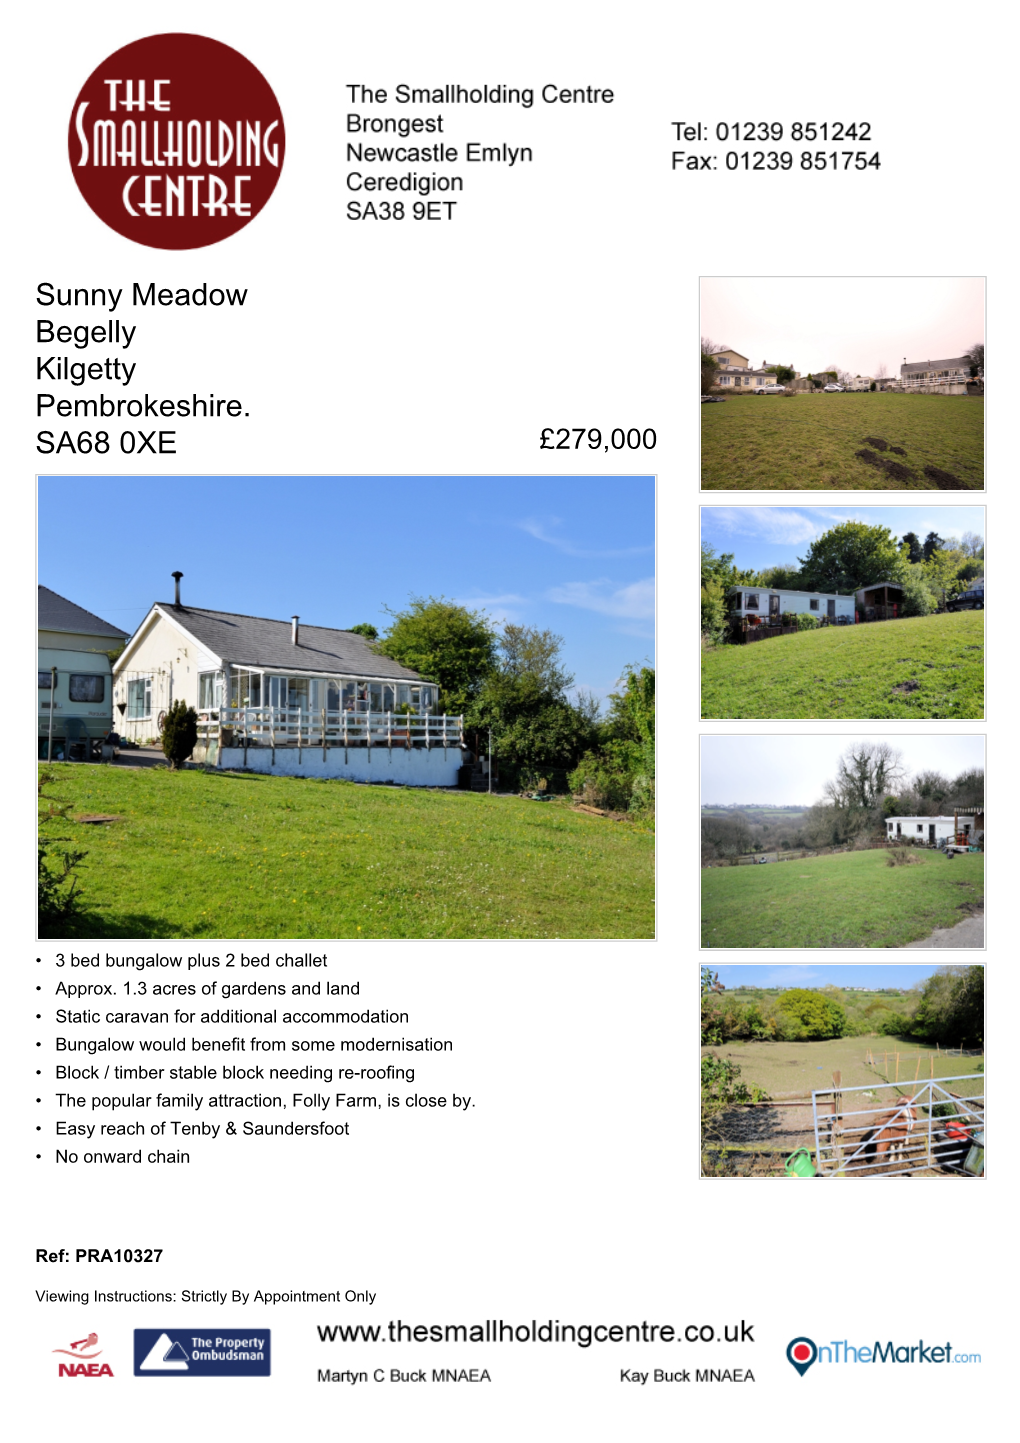 Sunny Meadow Begelly Kilgetty Pembrokeshire. SA68 0XE £279,000